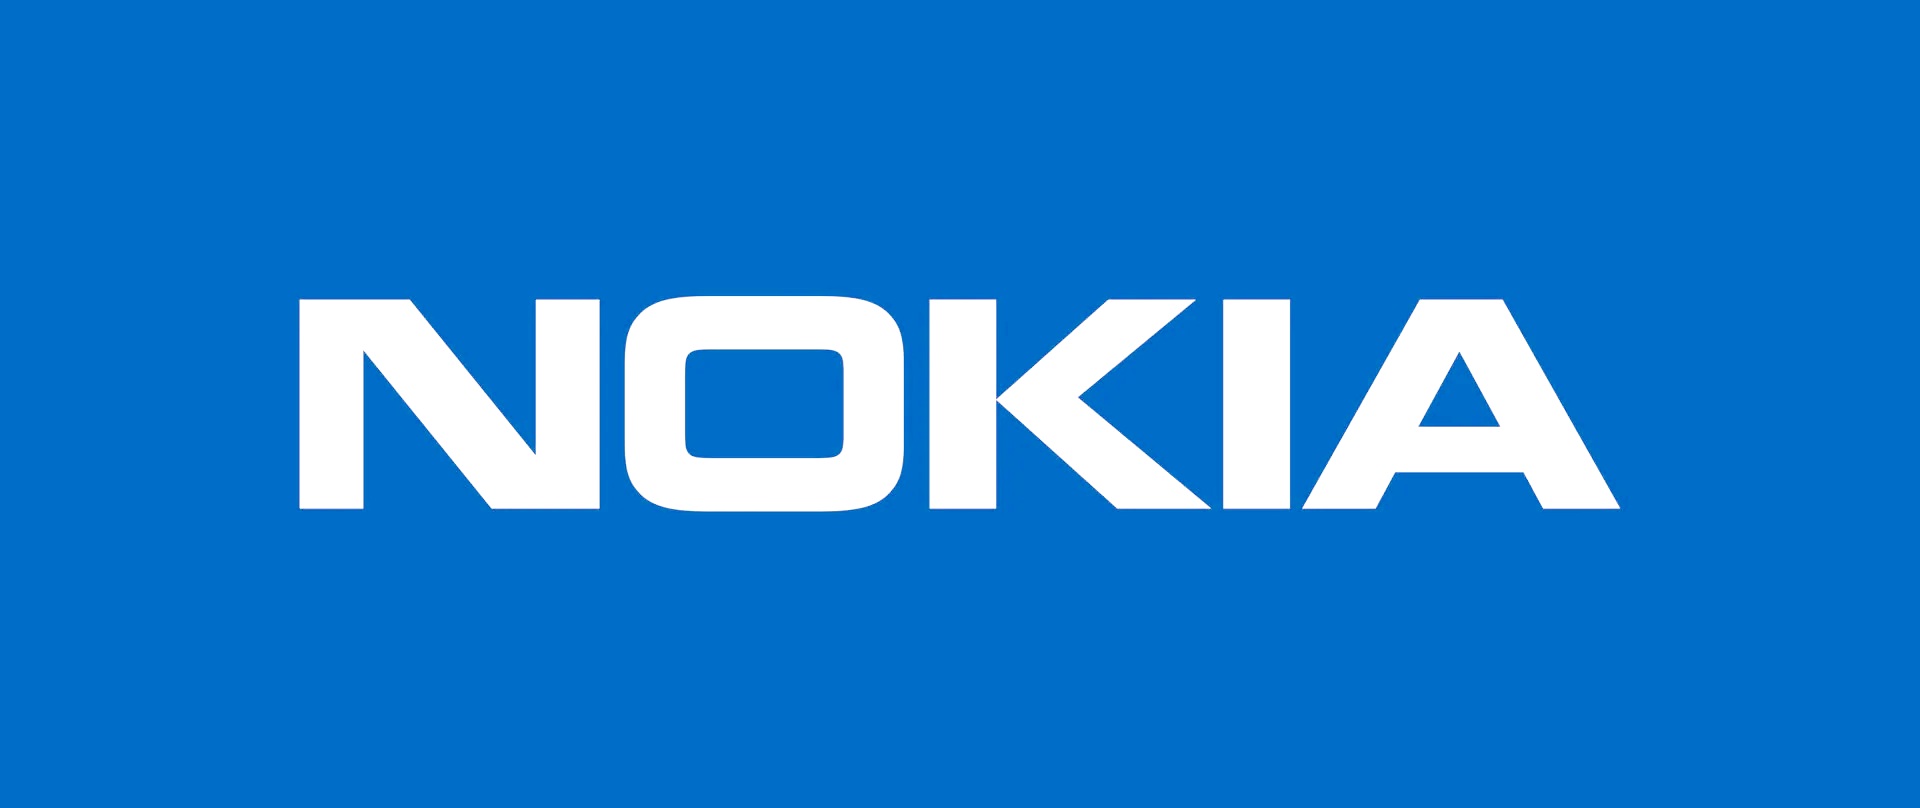 Nokia Off Campus Drive 2022 Hiring Graduate Engineer Trainee Across India